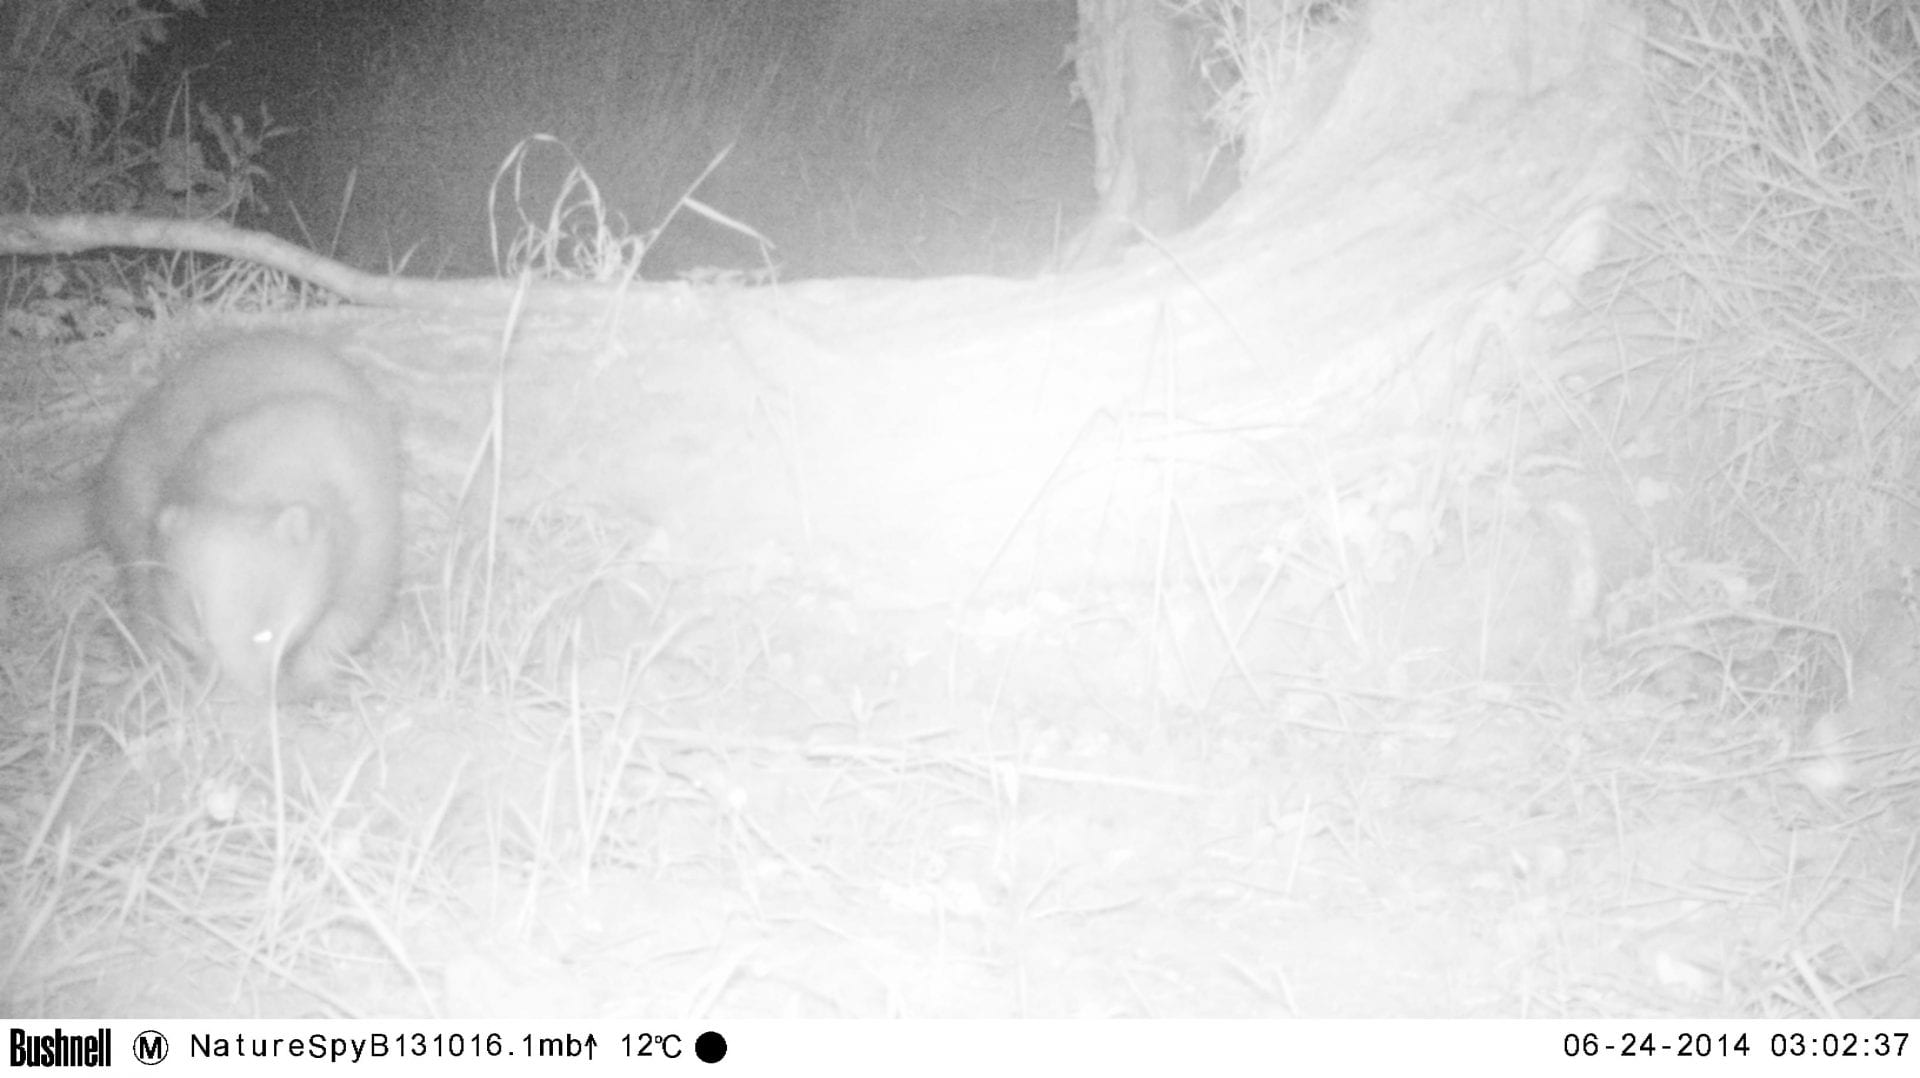 Badger on camera trap